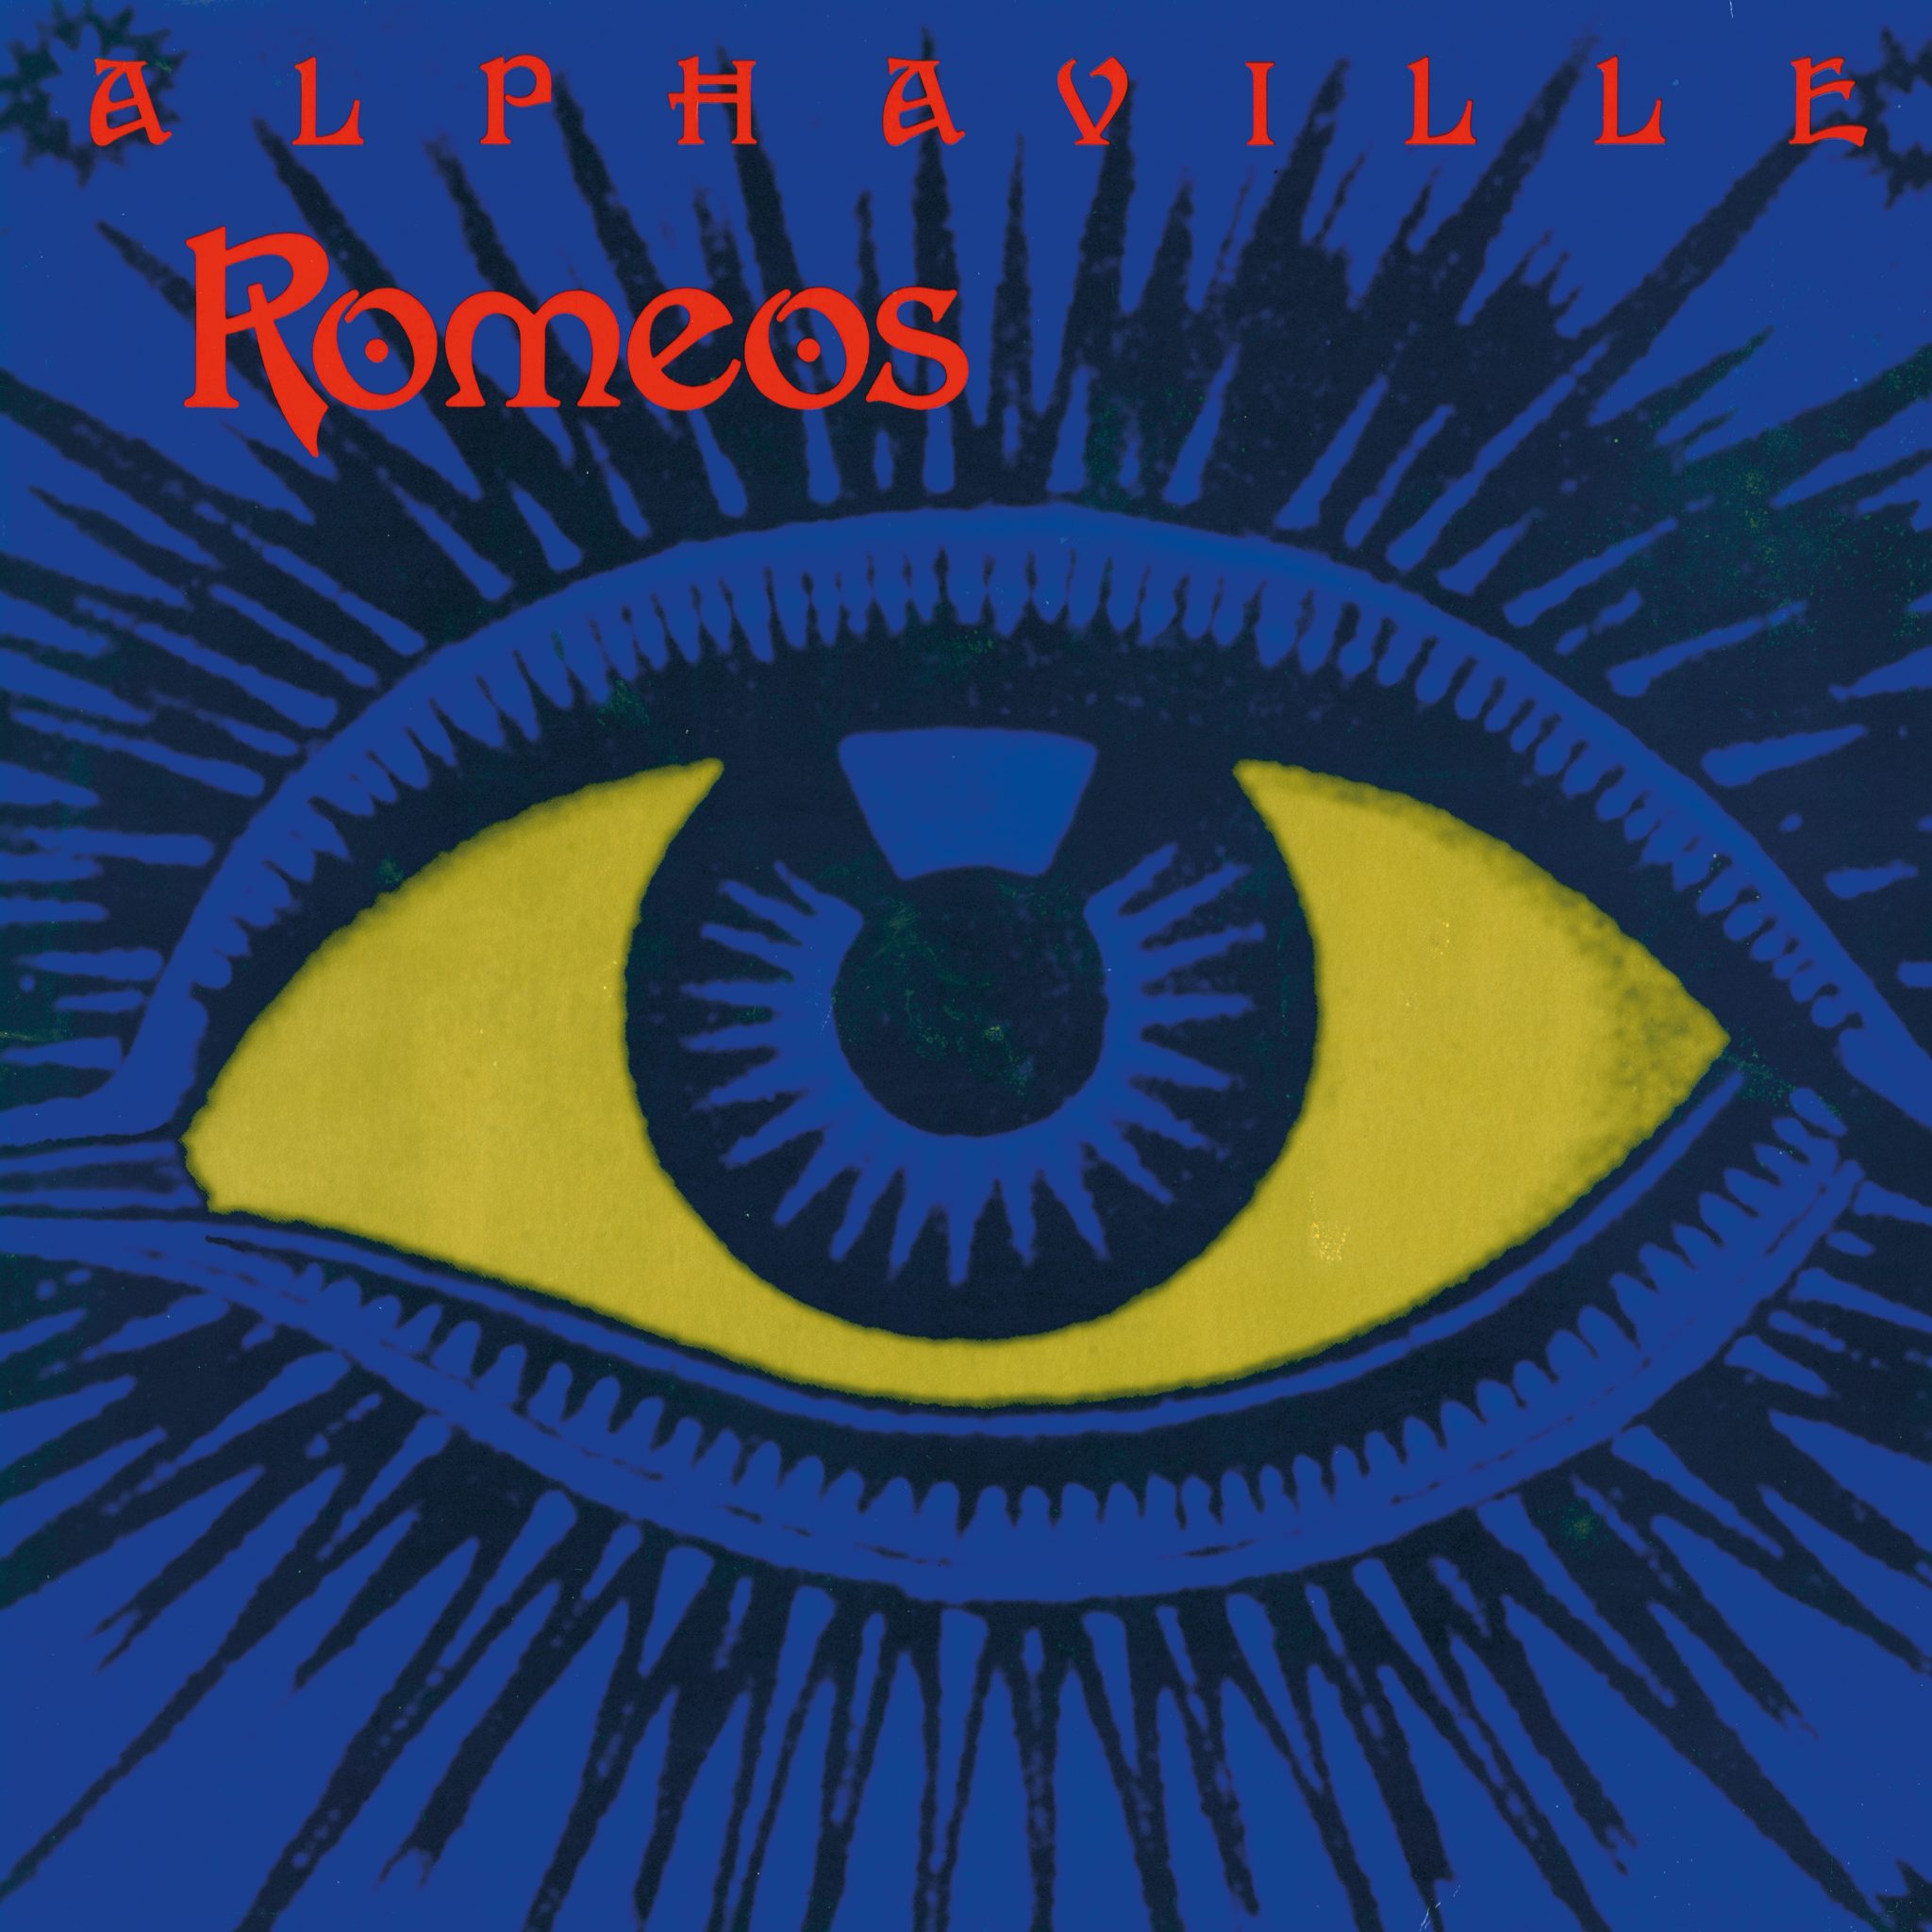 Romeos to Alphaville Moonbase